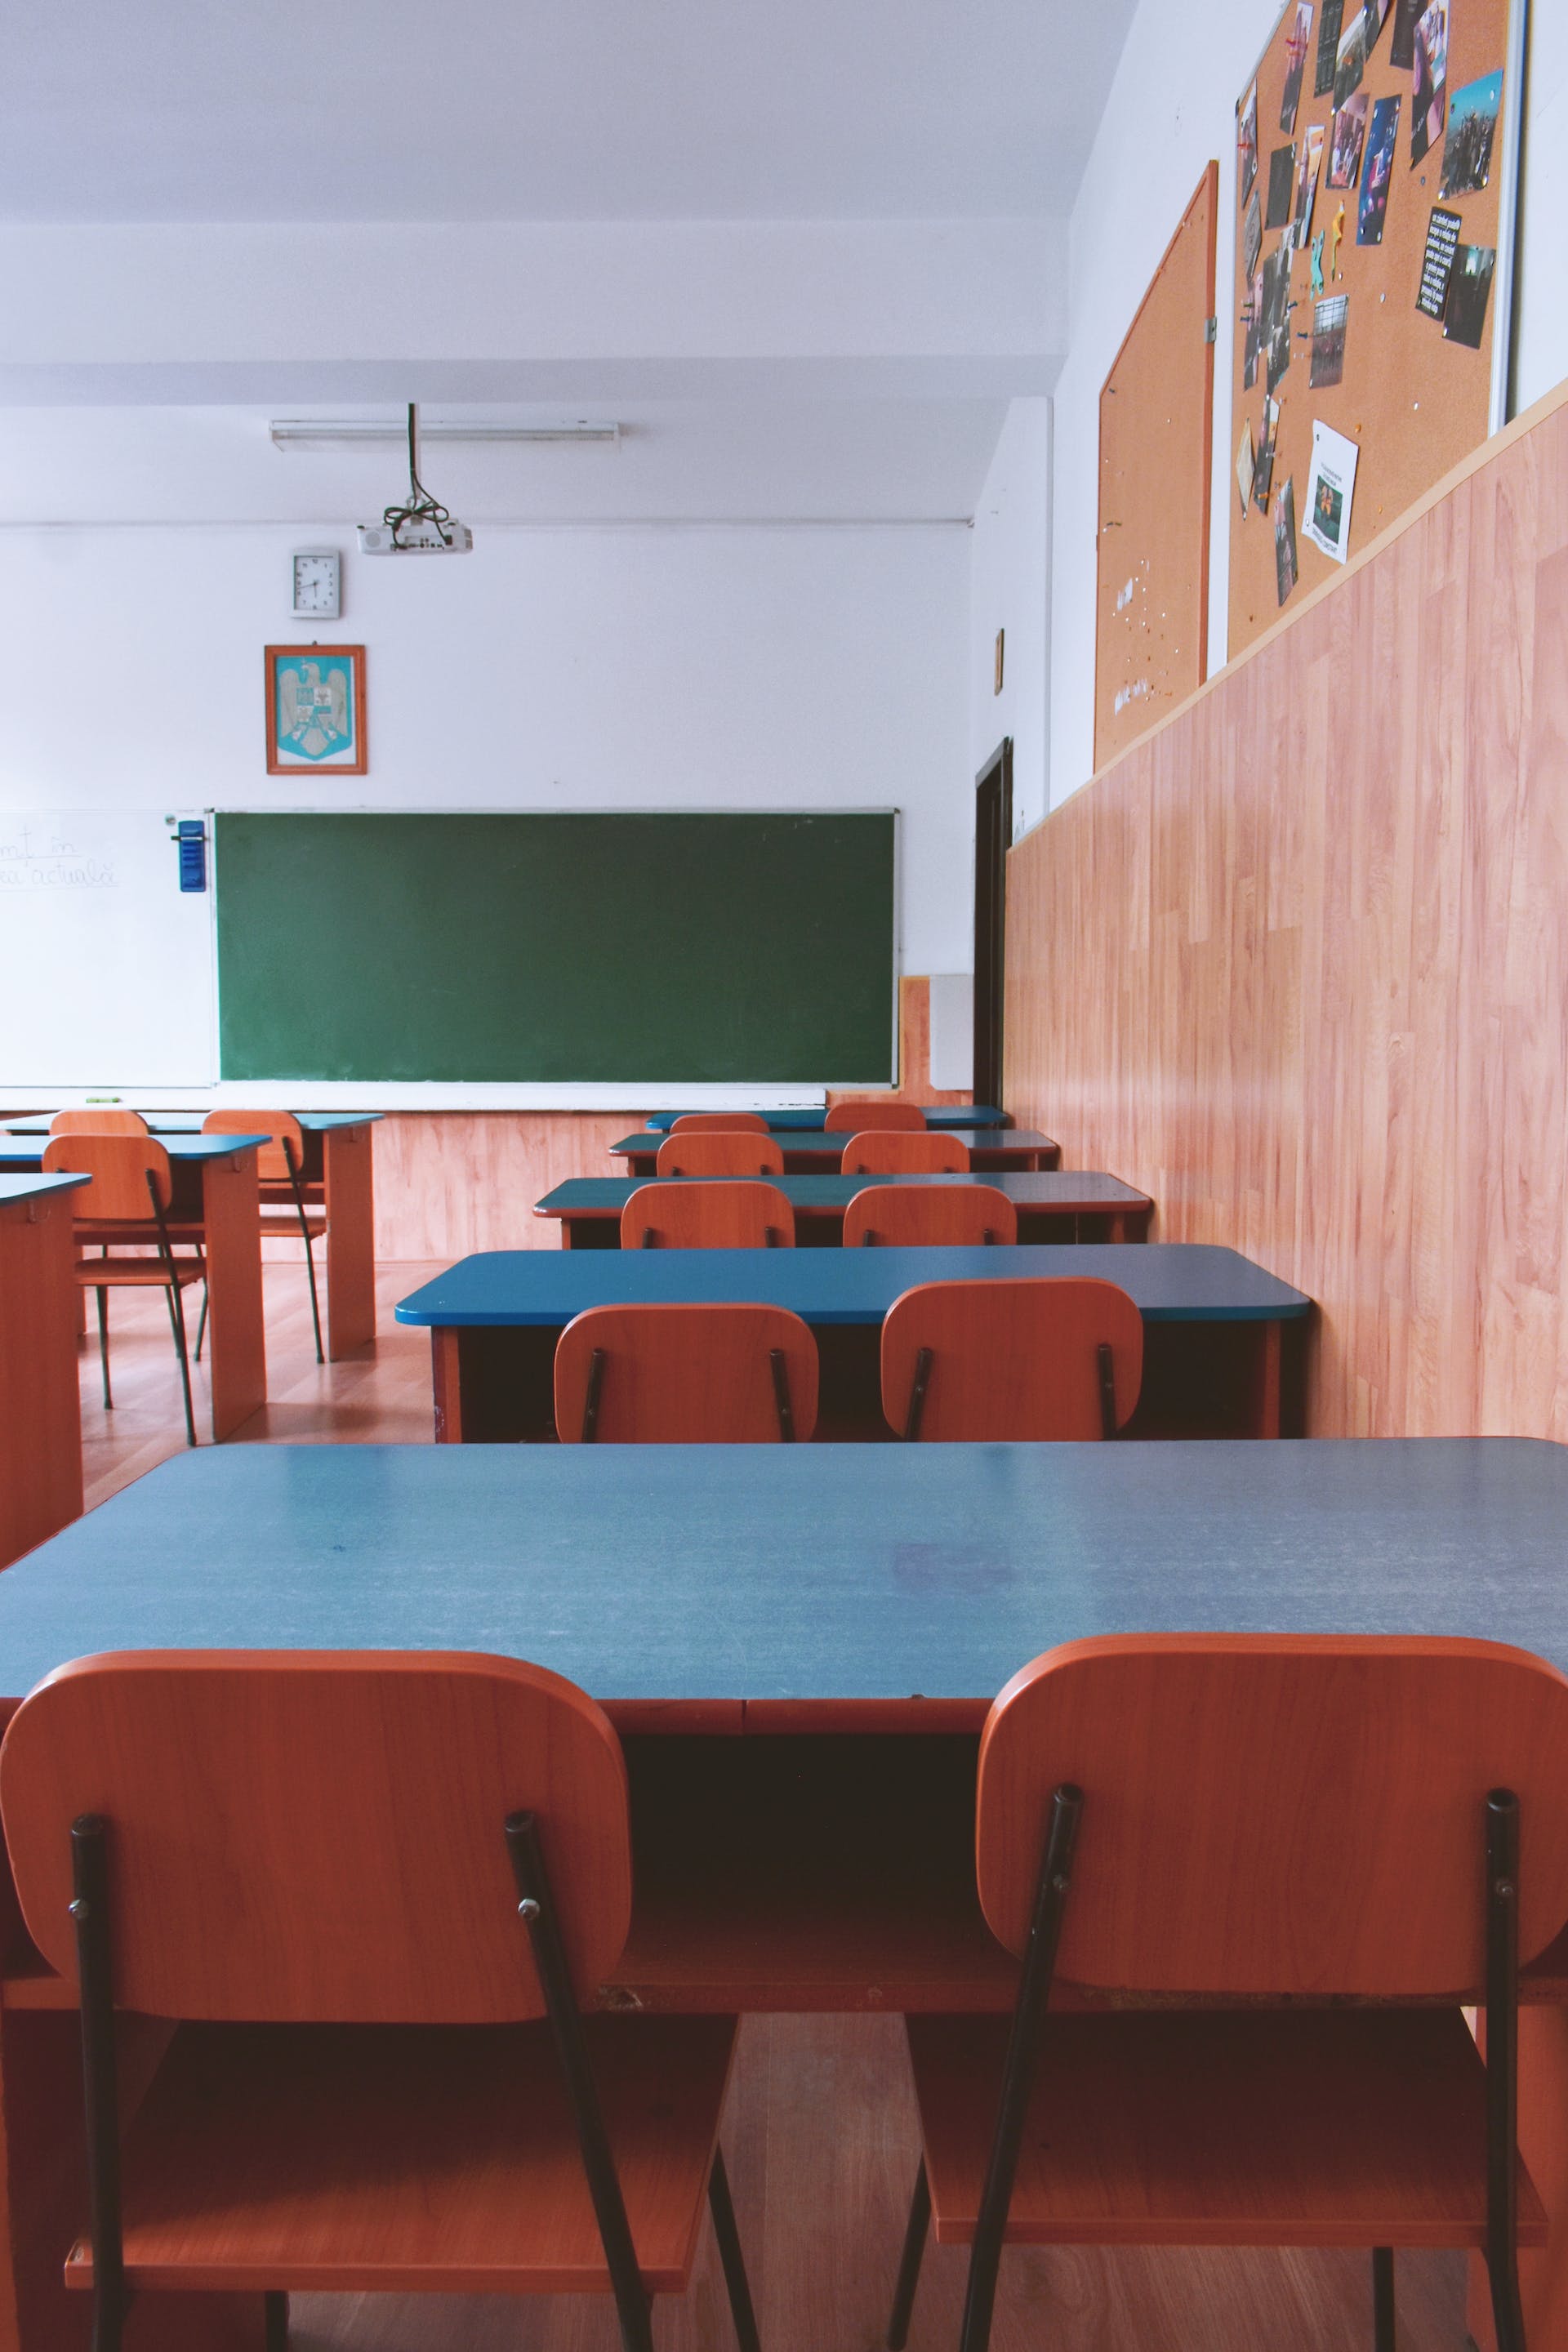 Une salle de classe vide | Source : Pexels